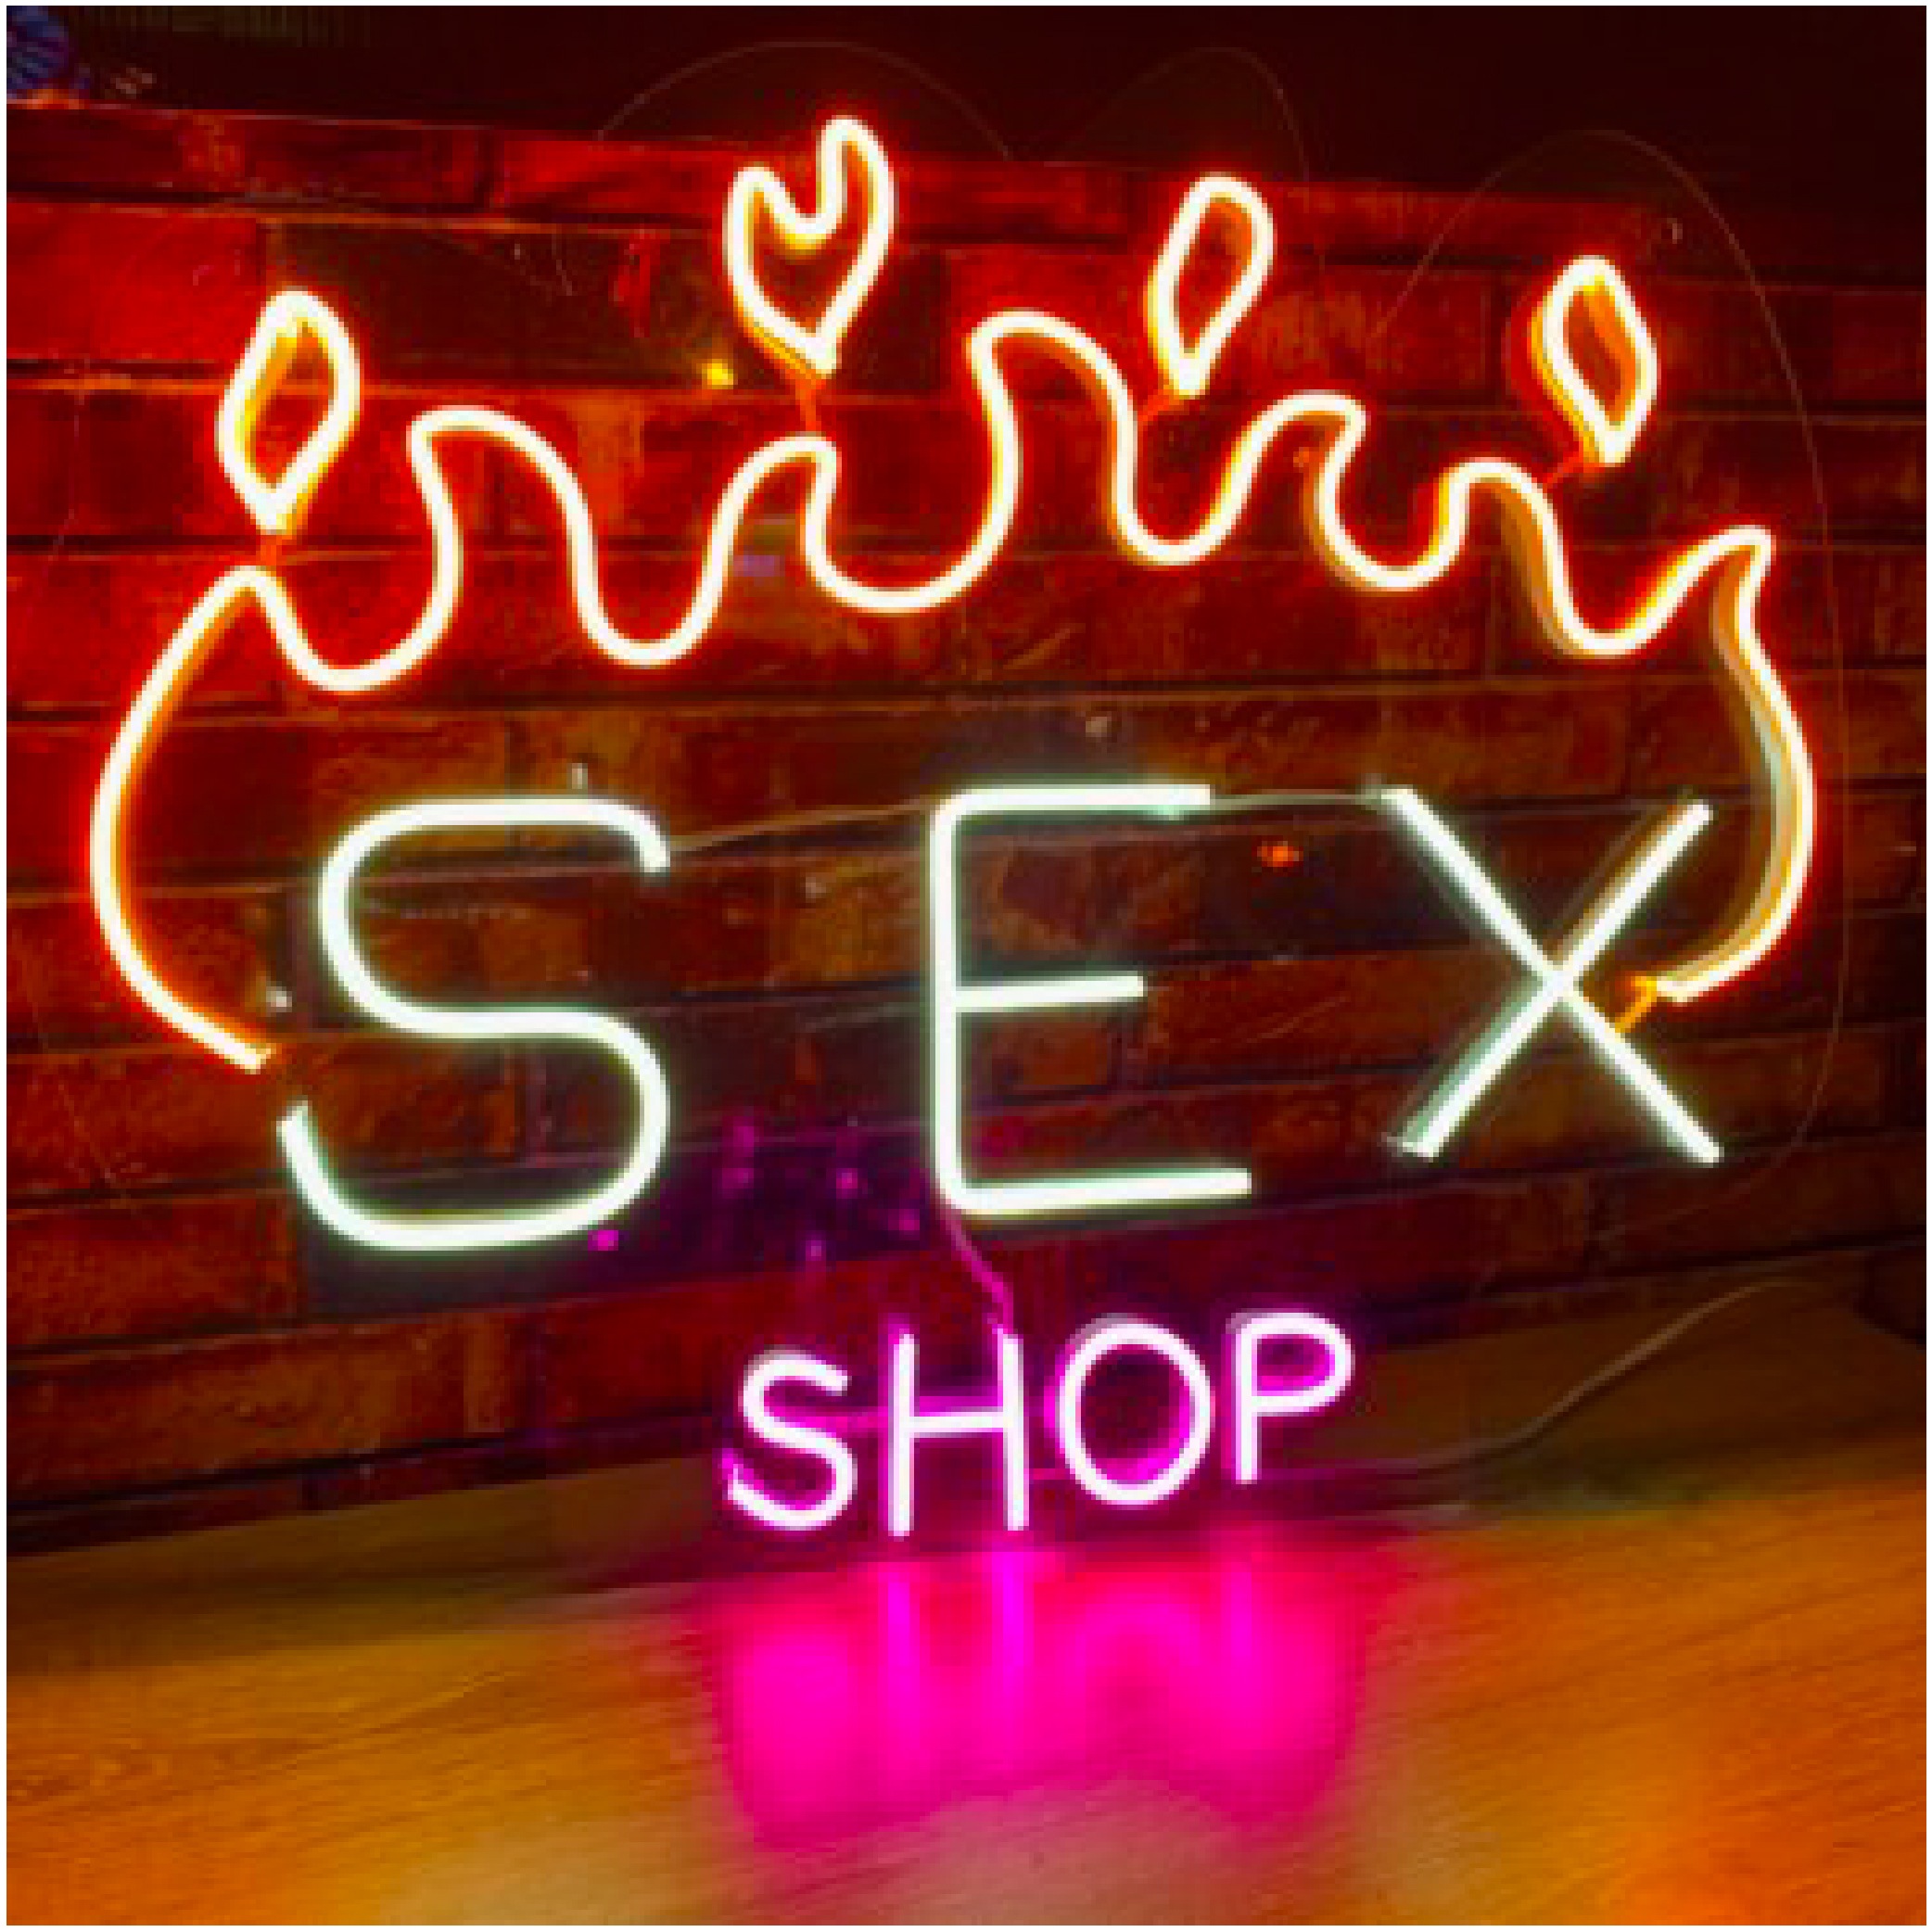 Sex Shop Aviso En Neón Vands Digital Avisos En Acrílico 7852